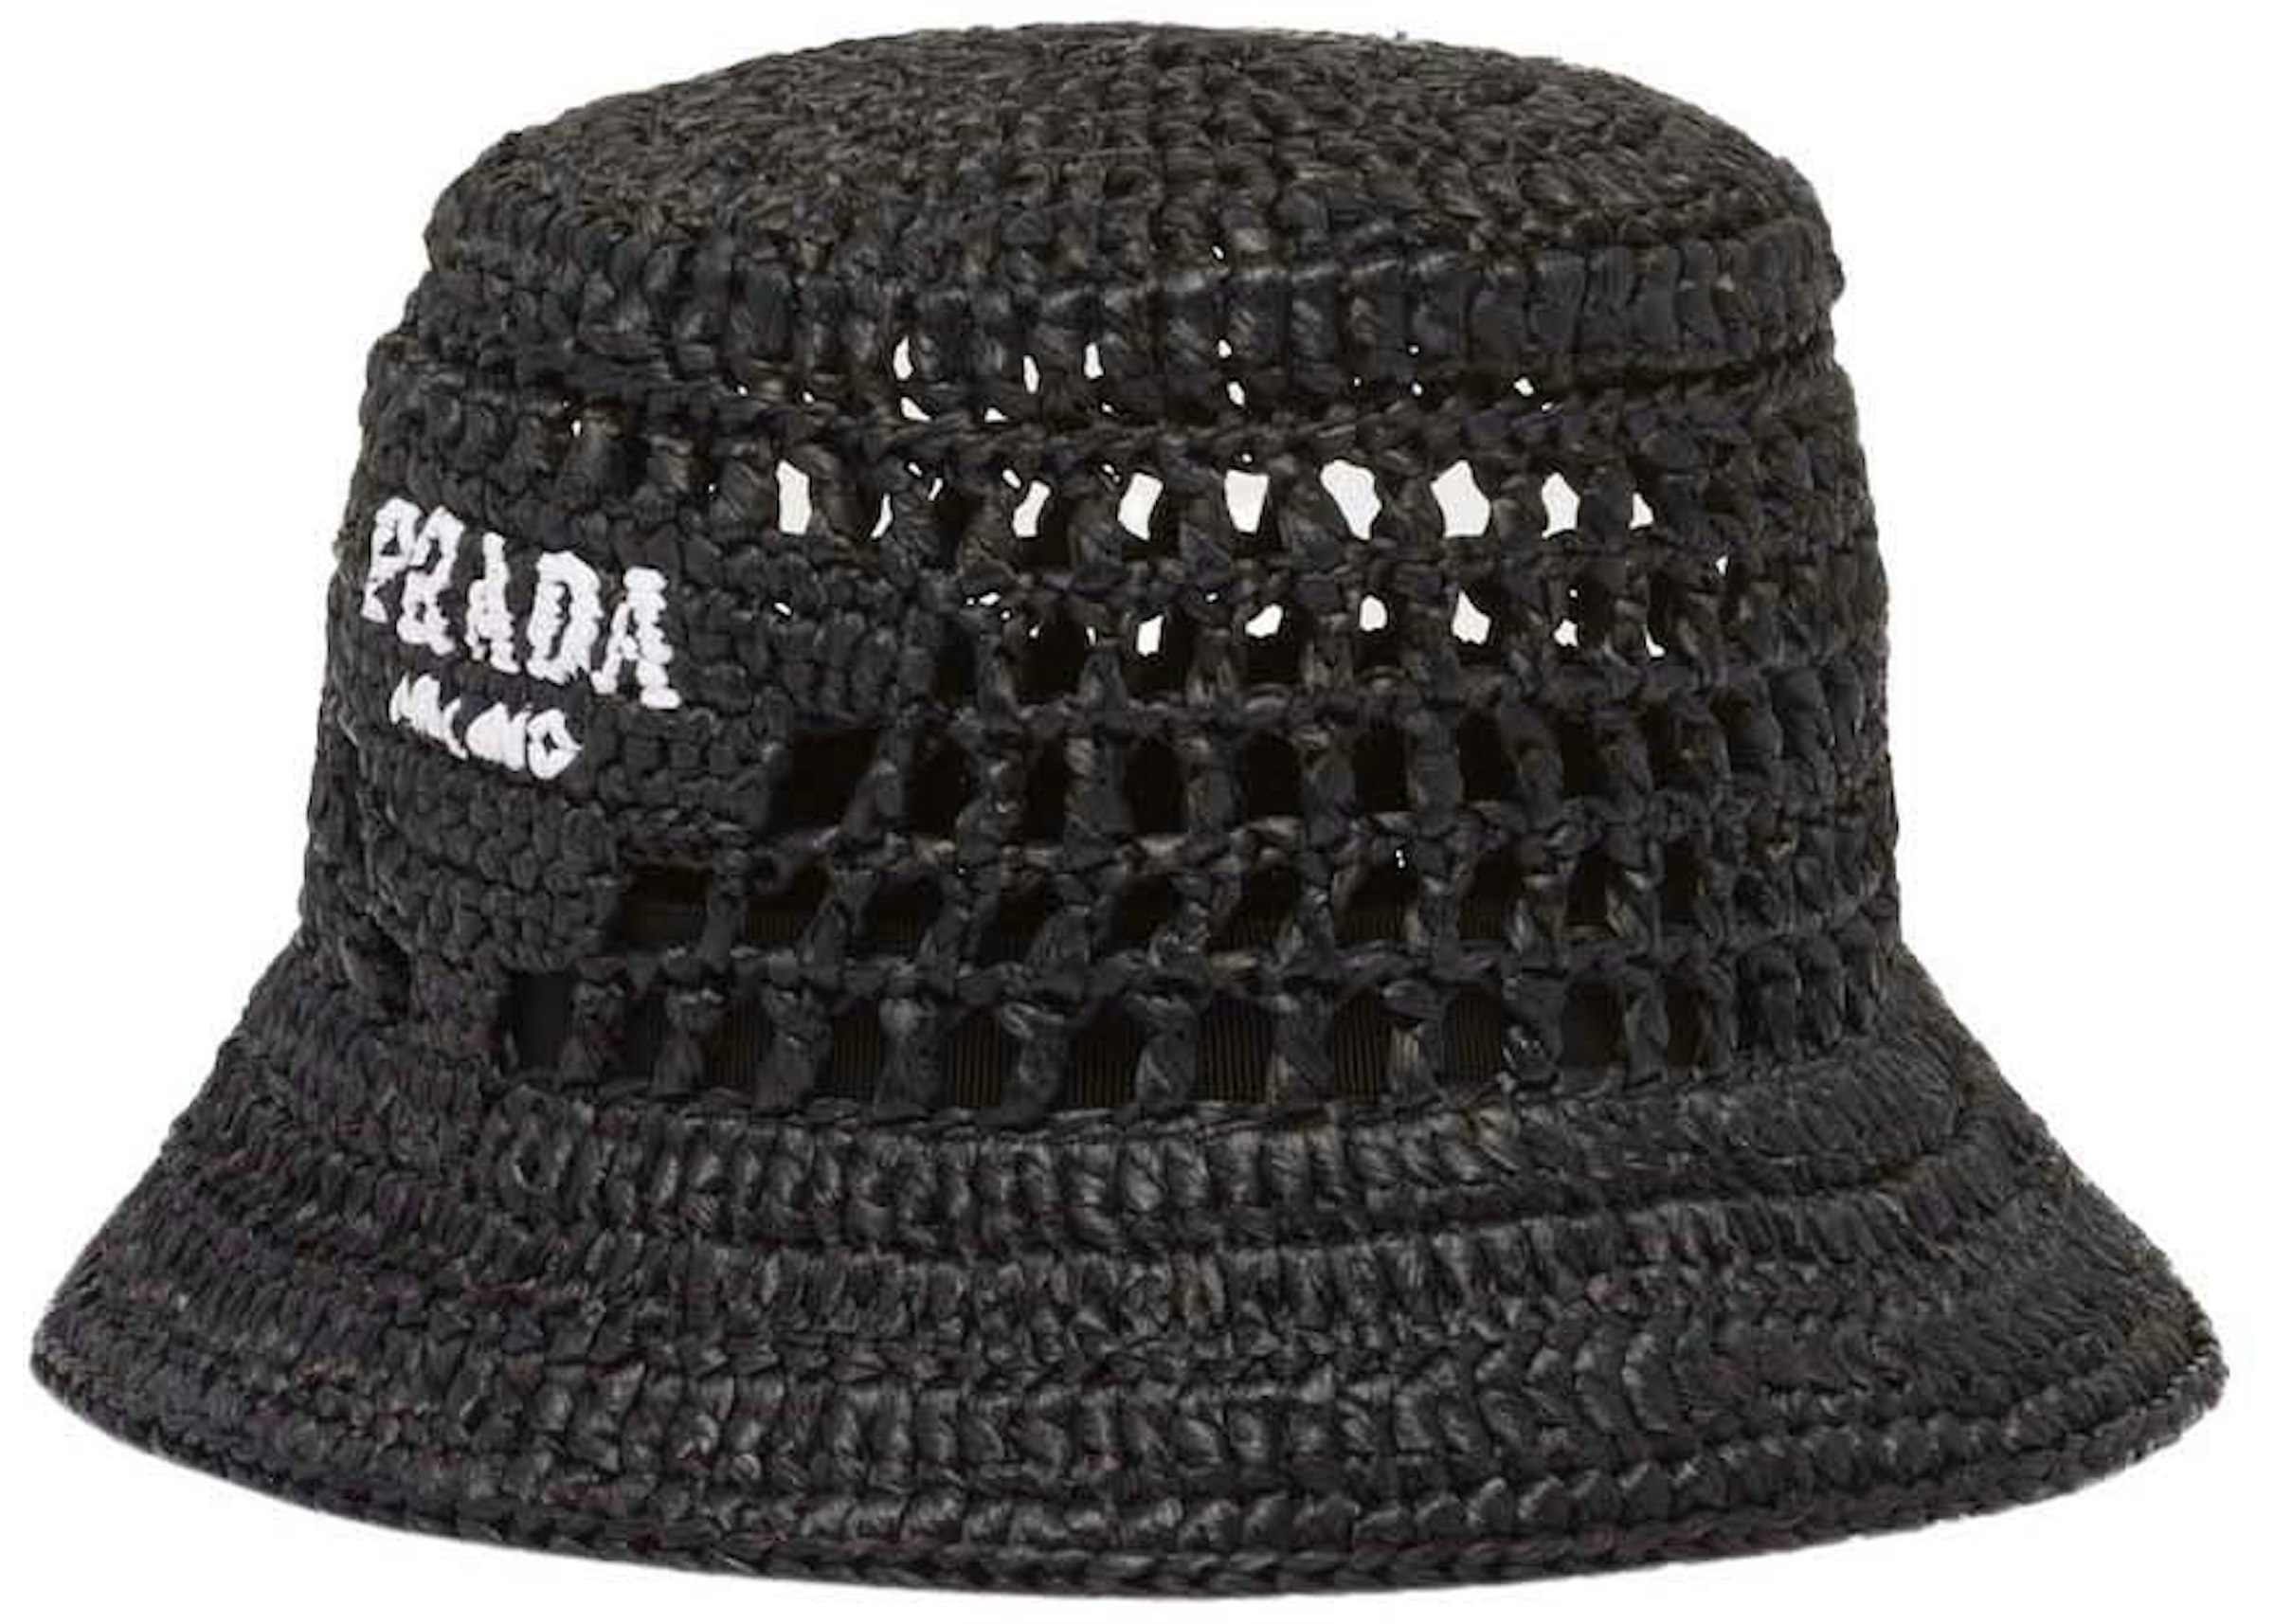 Prada Raffia Bucket Hat Black/White in Raffia - US